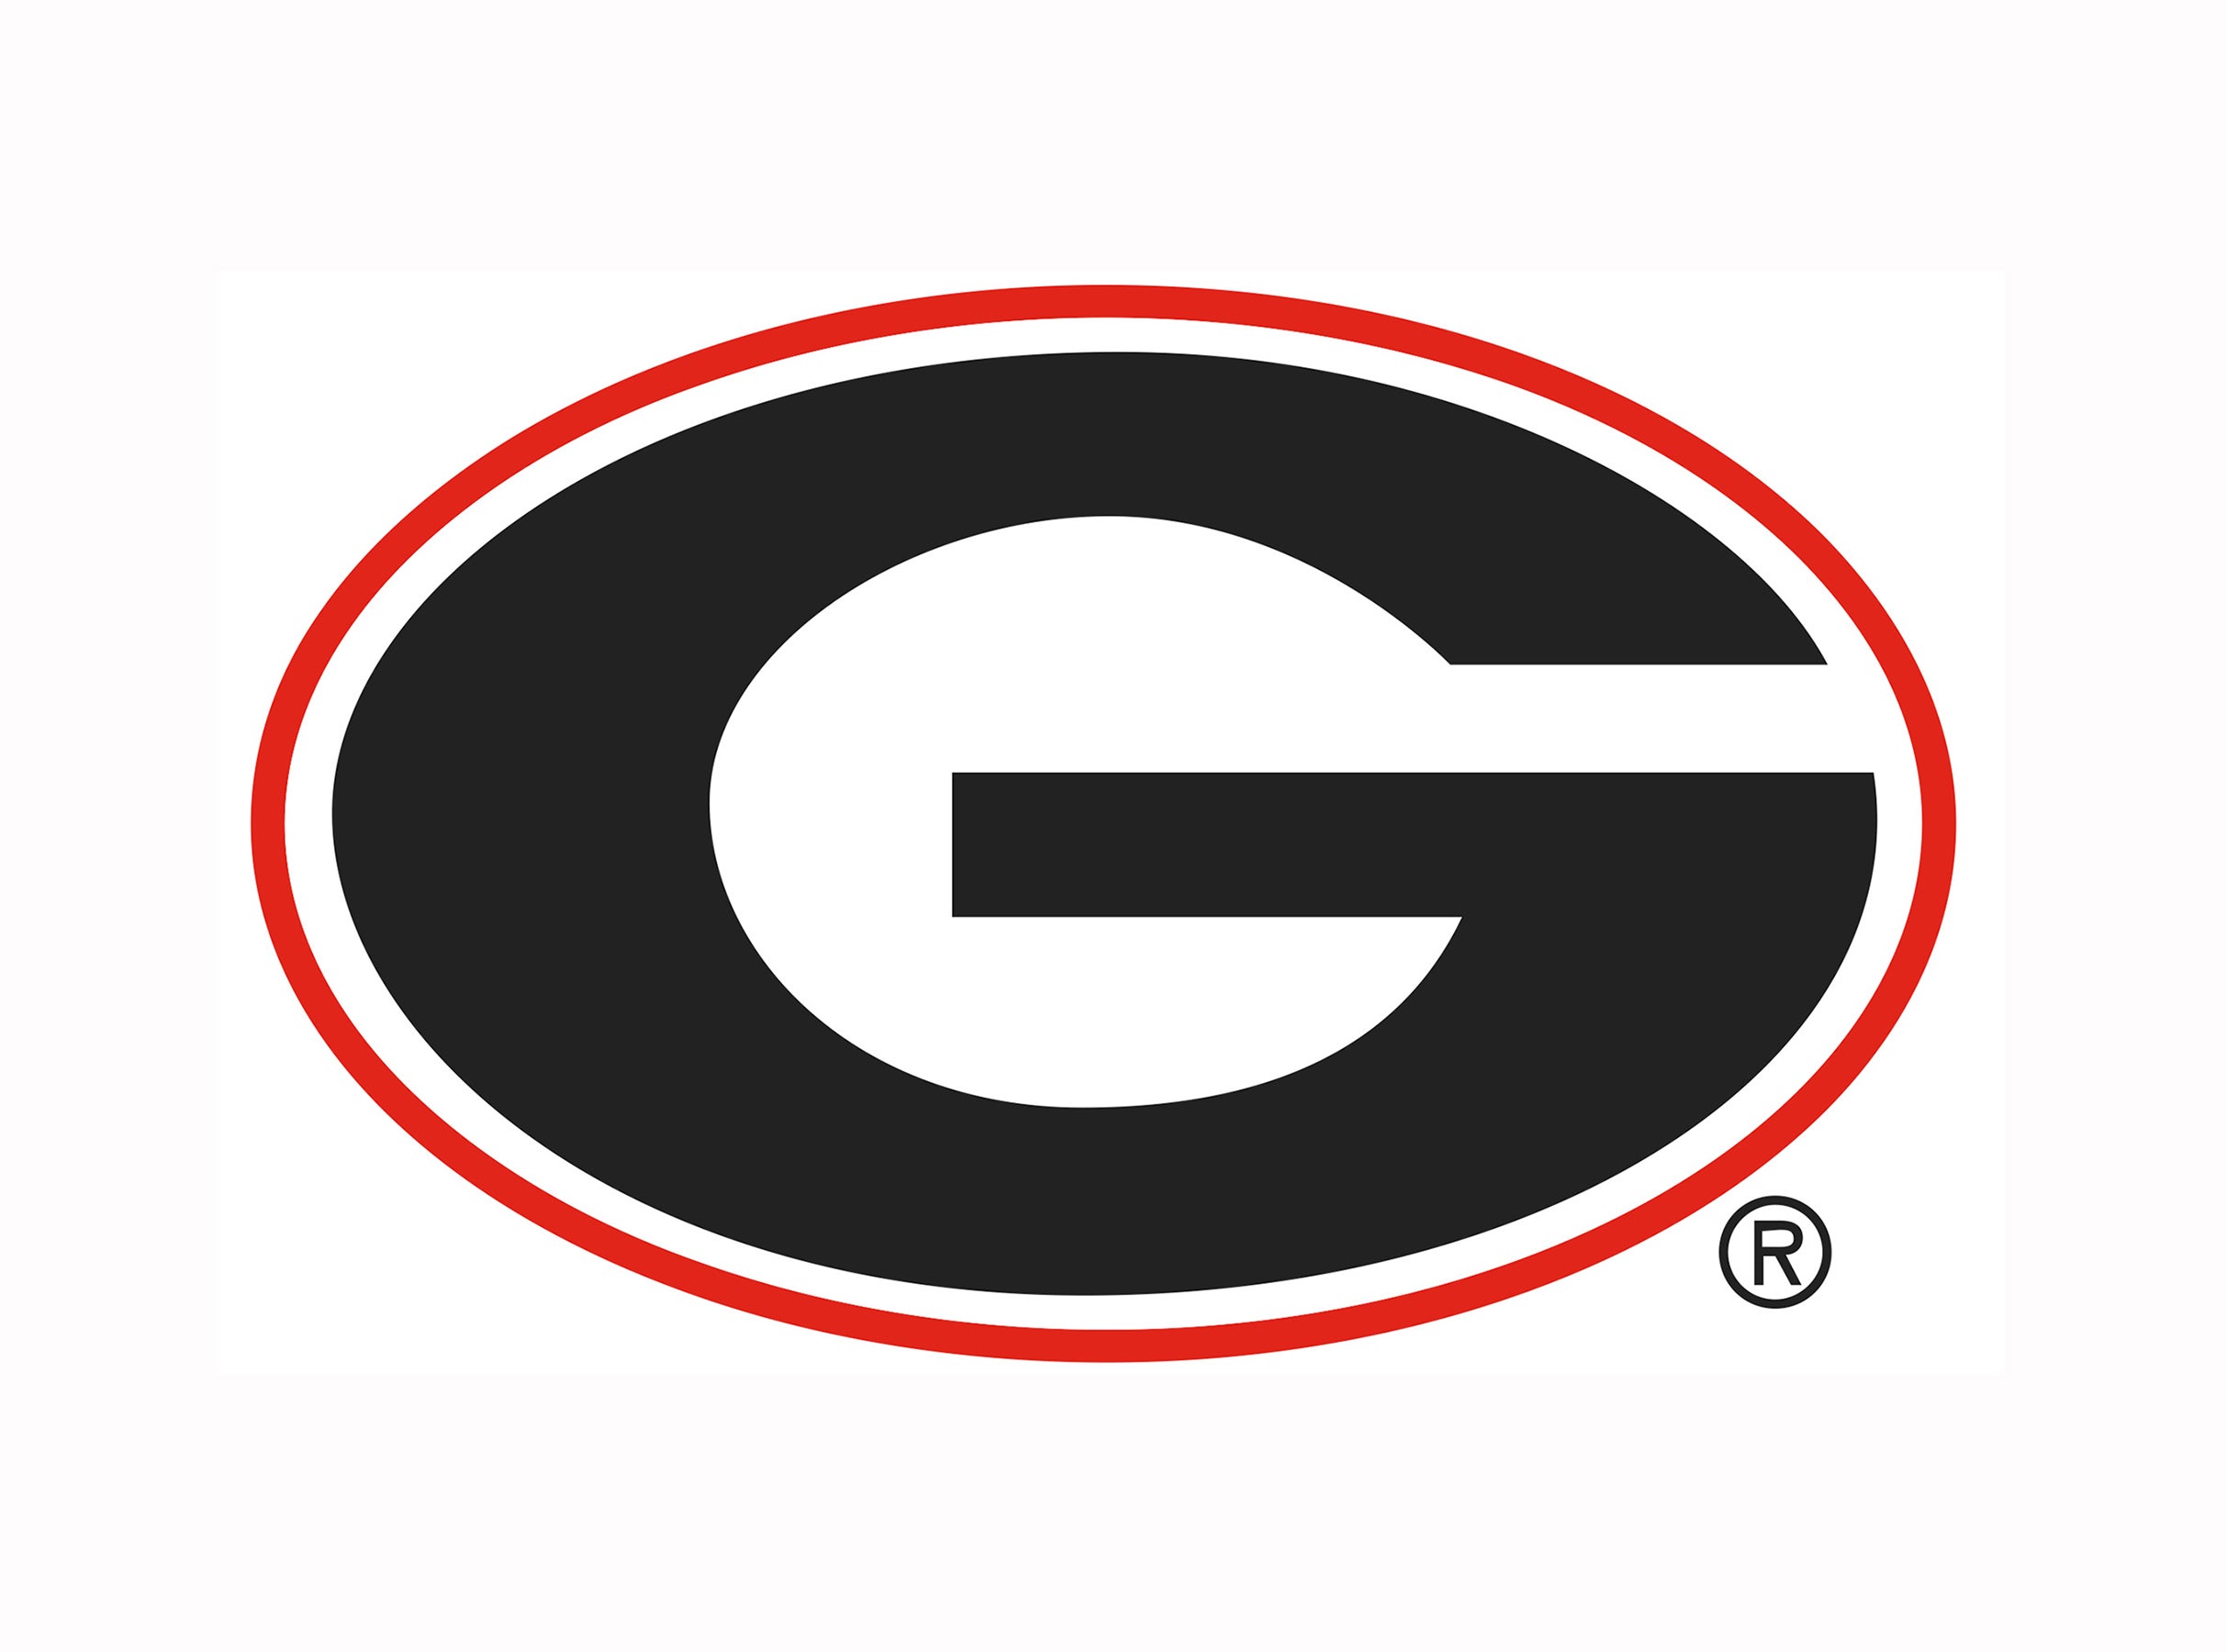 Georgia Bulldogs Football vs. Mississippi State Bulldogs Football